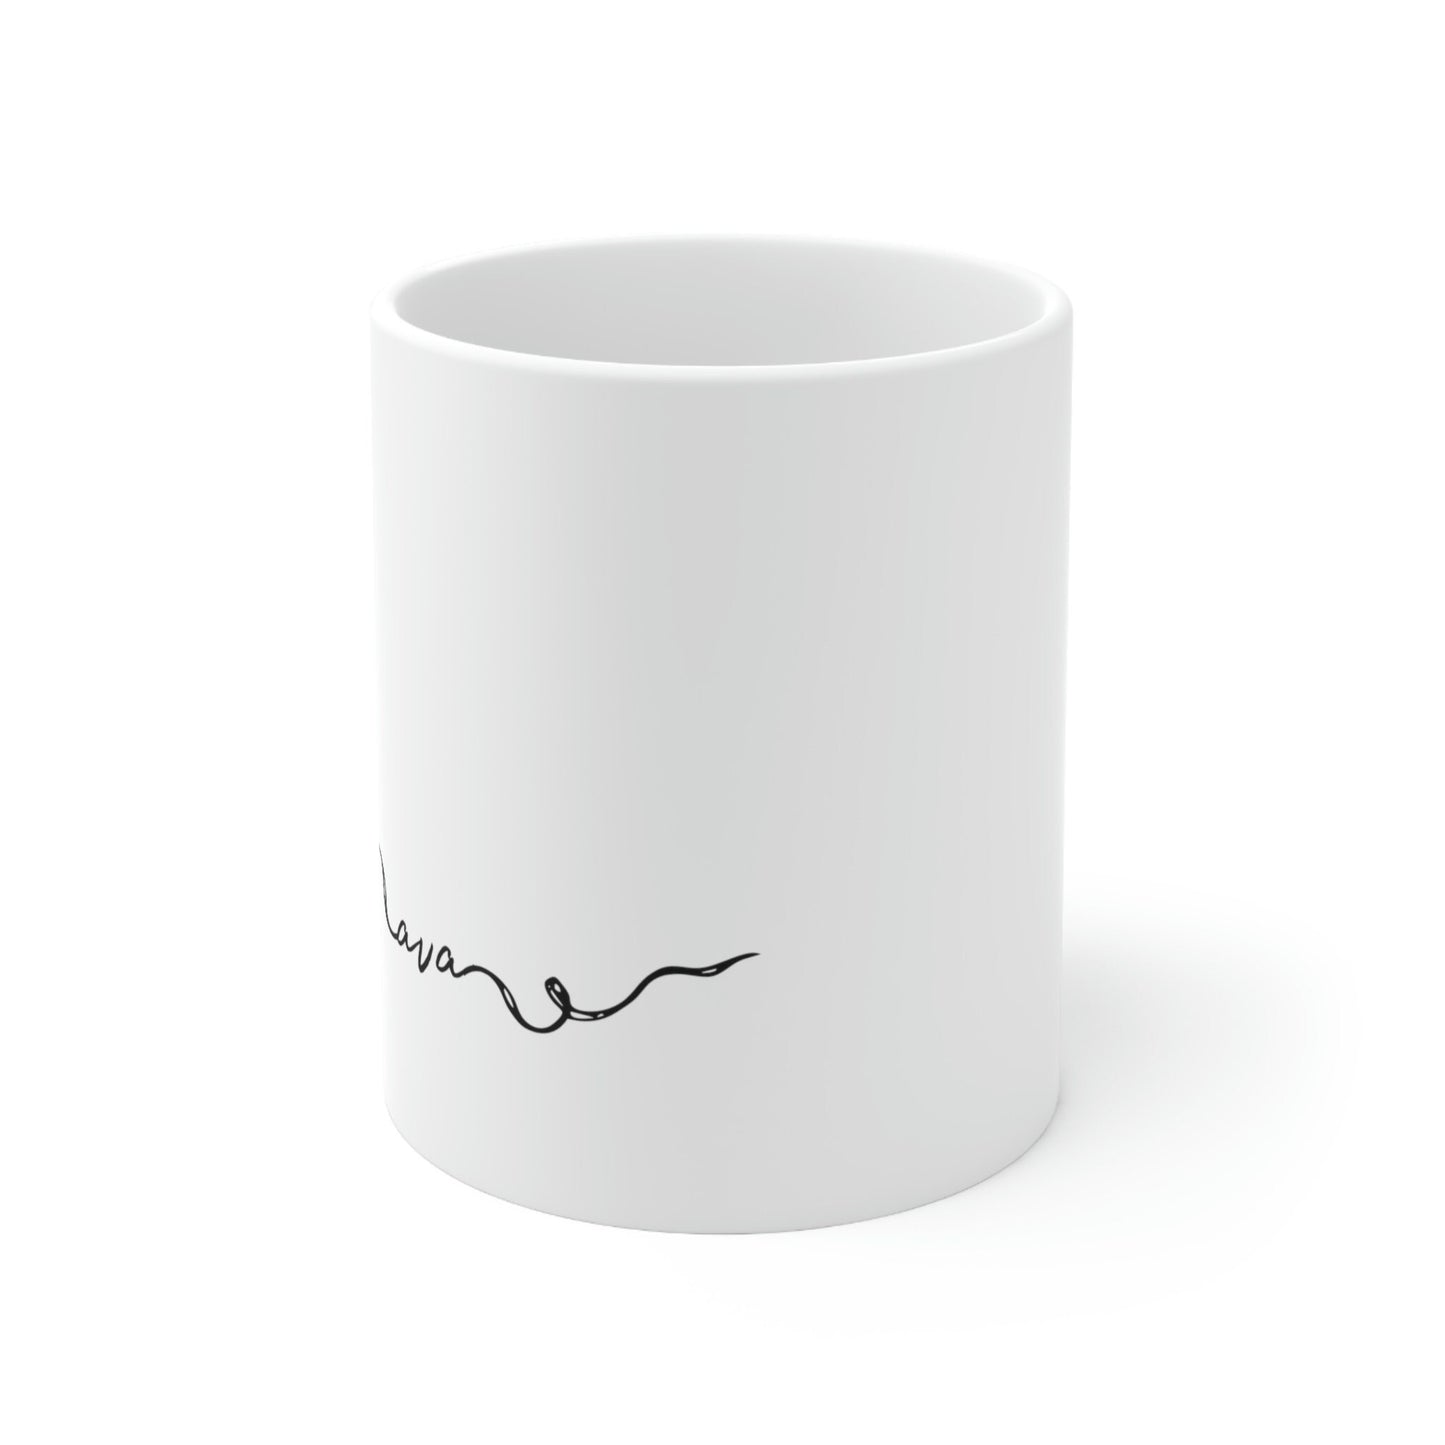 "Write Your Name In Yarn" / Personalized Mug